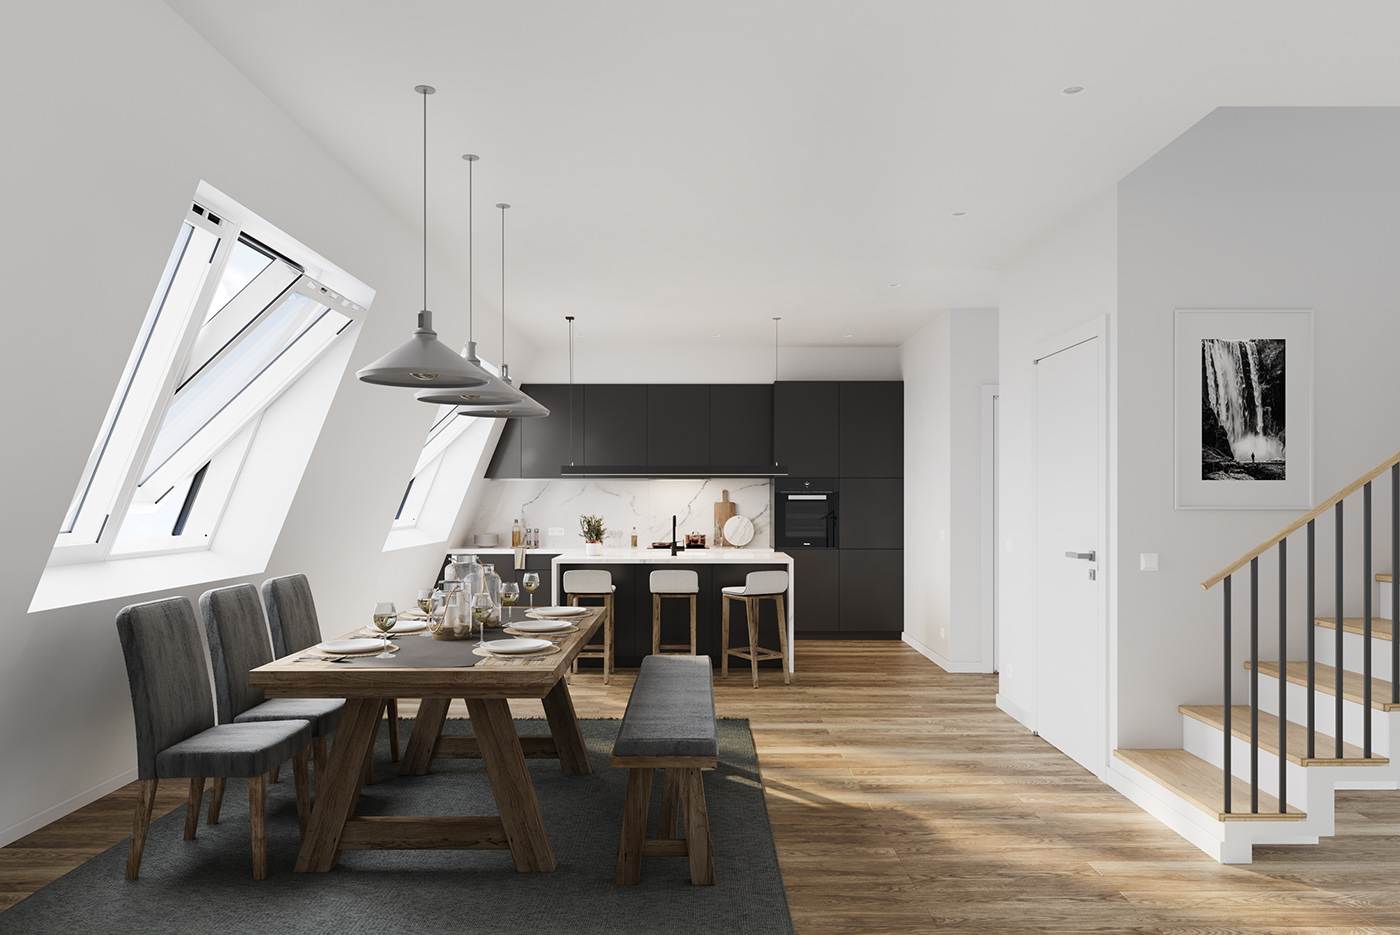 Scandinavian residential apartment Interior modern visualization CGI